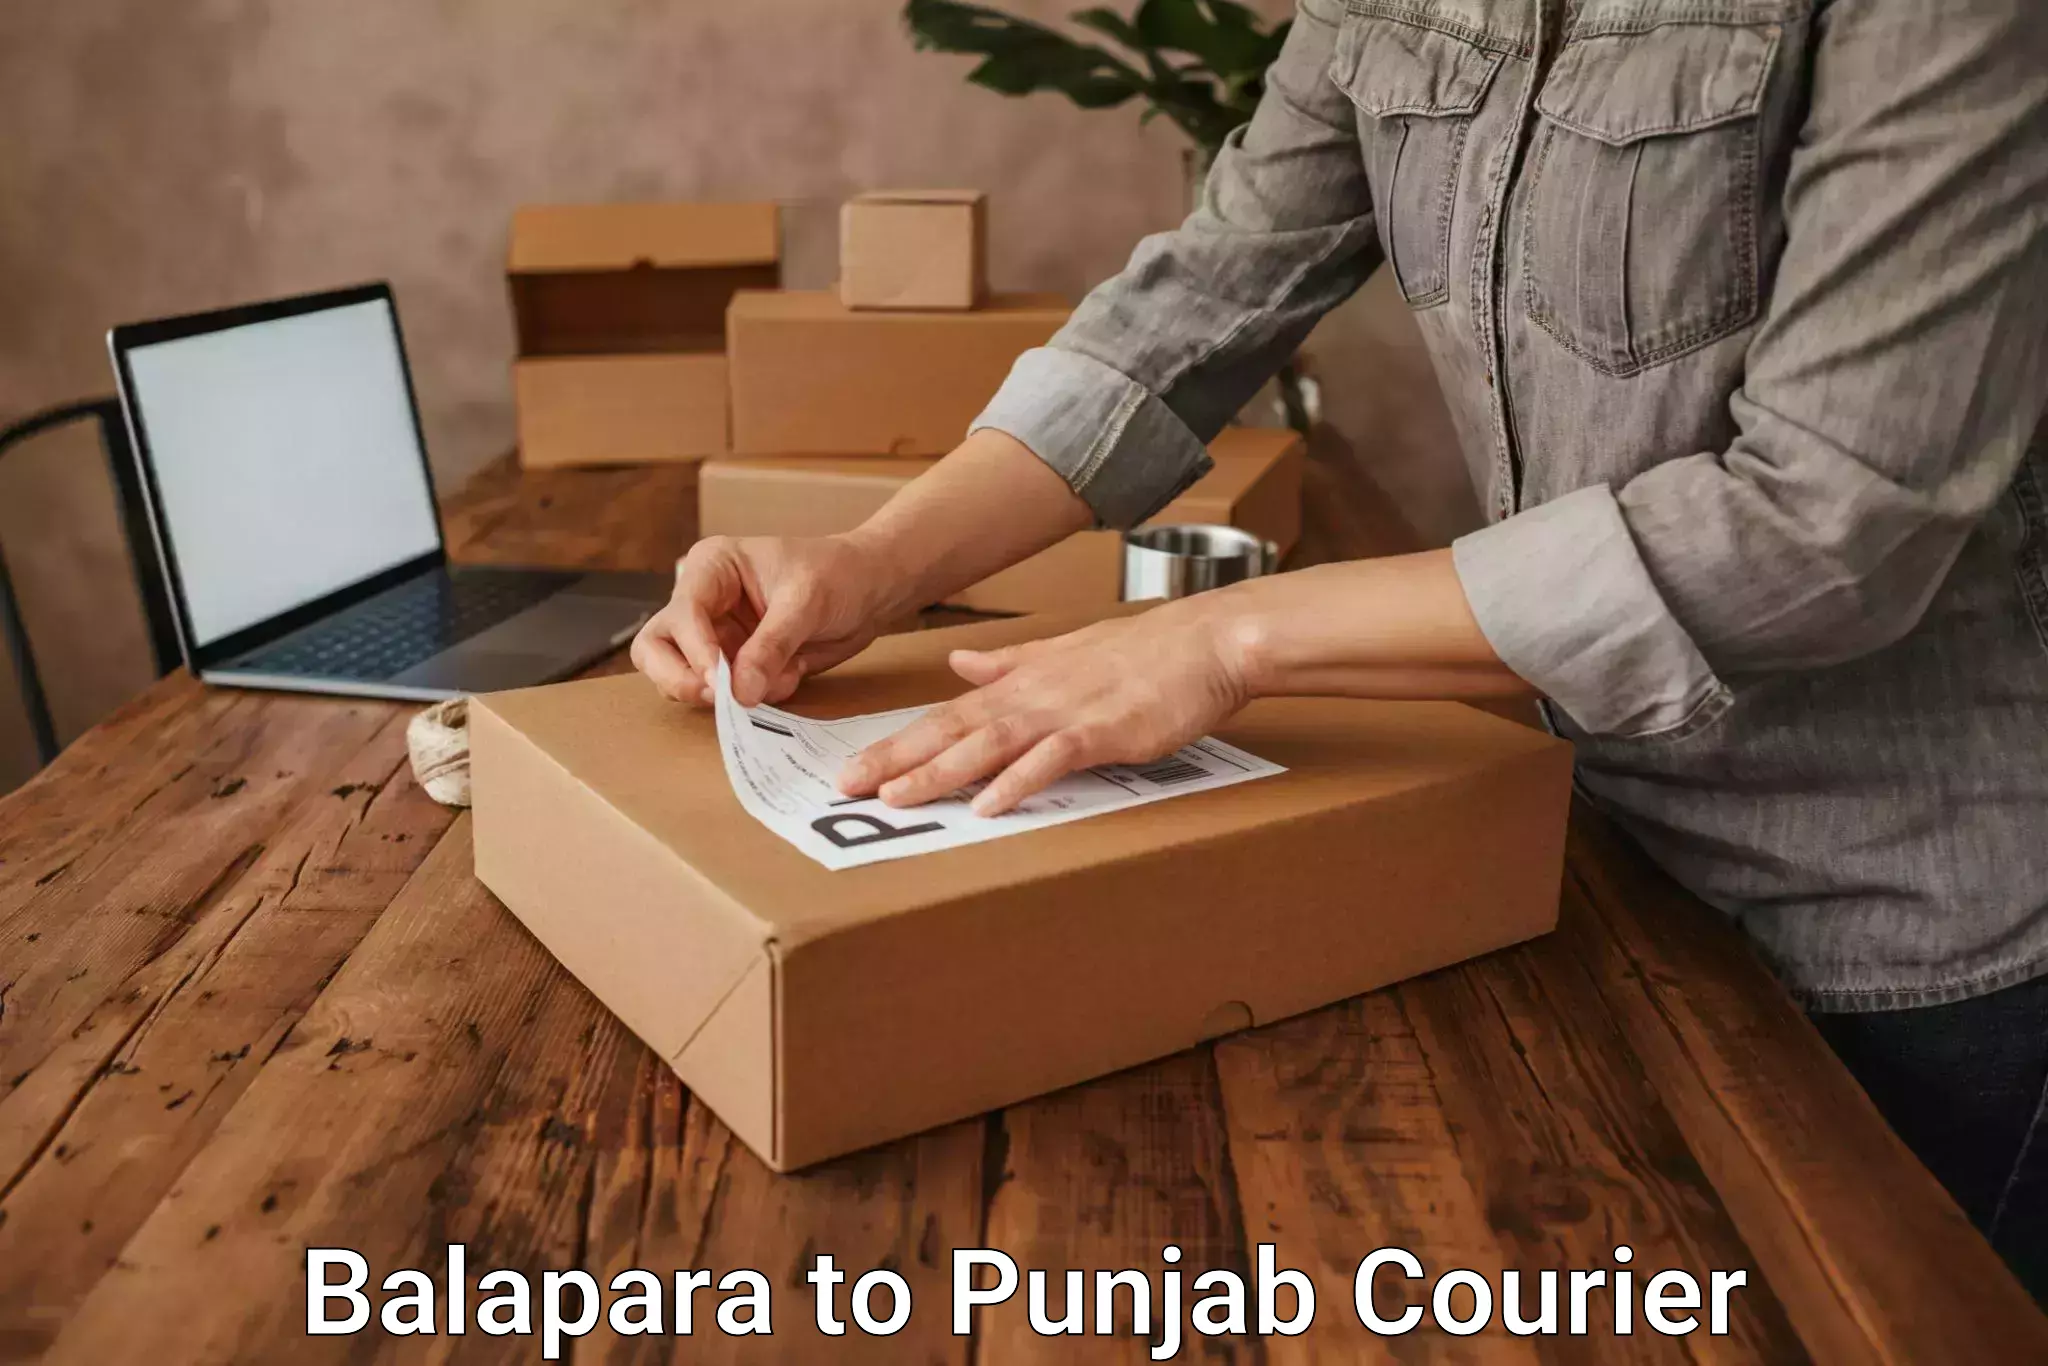 Global courier networks Balapara to Punjab